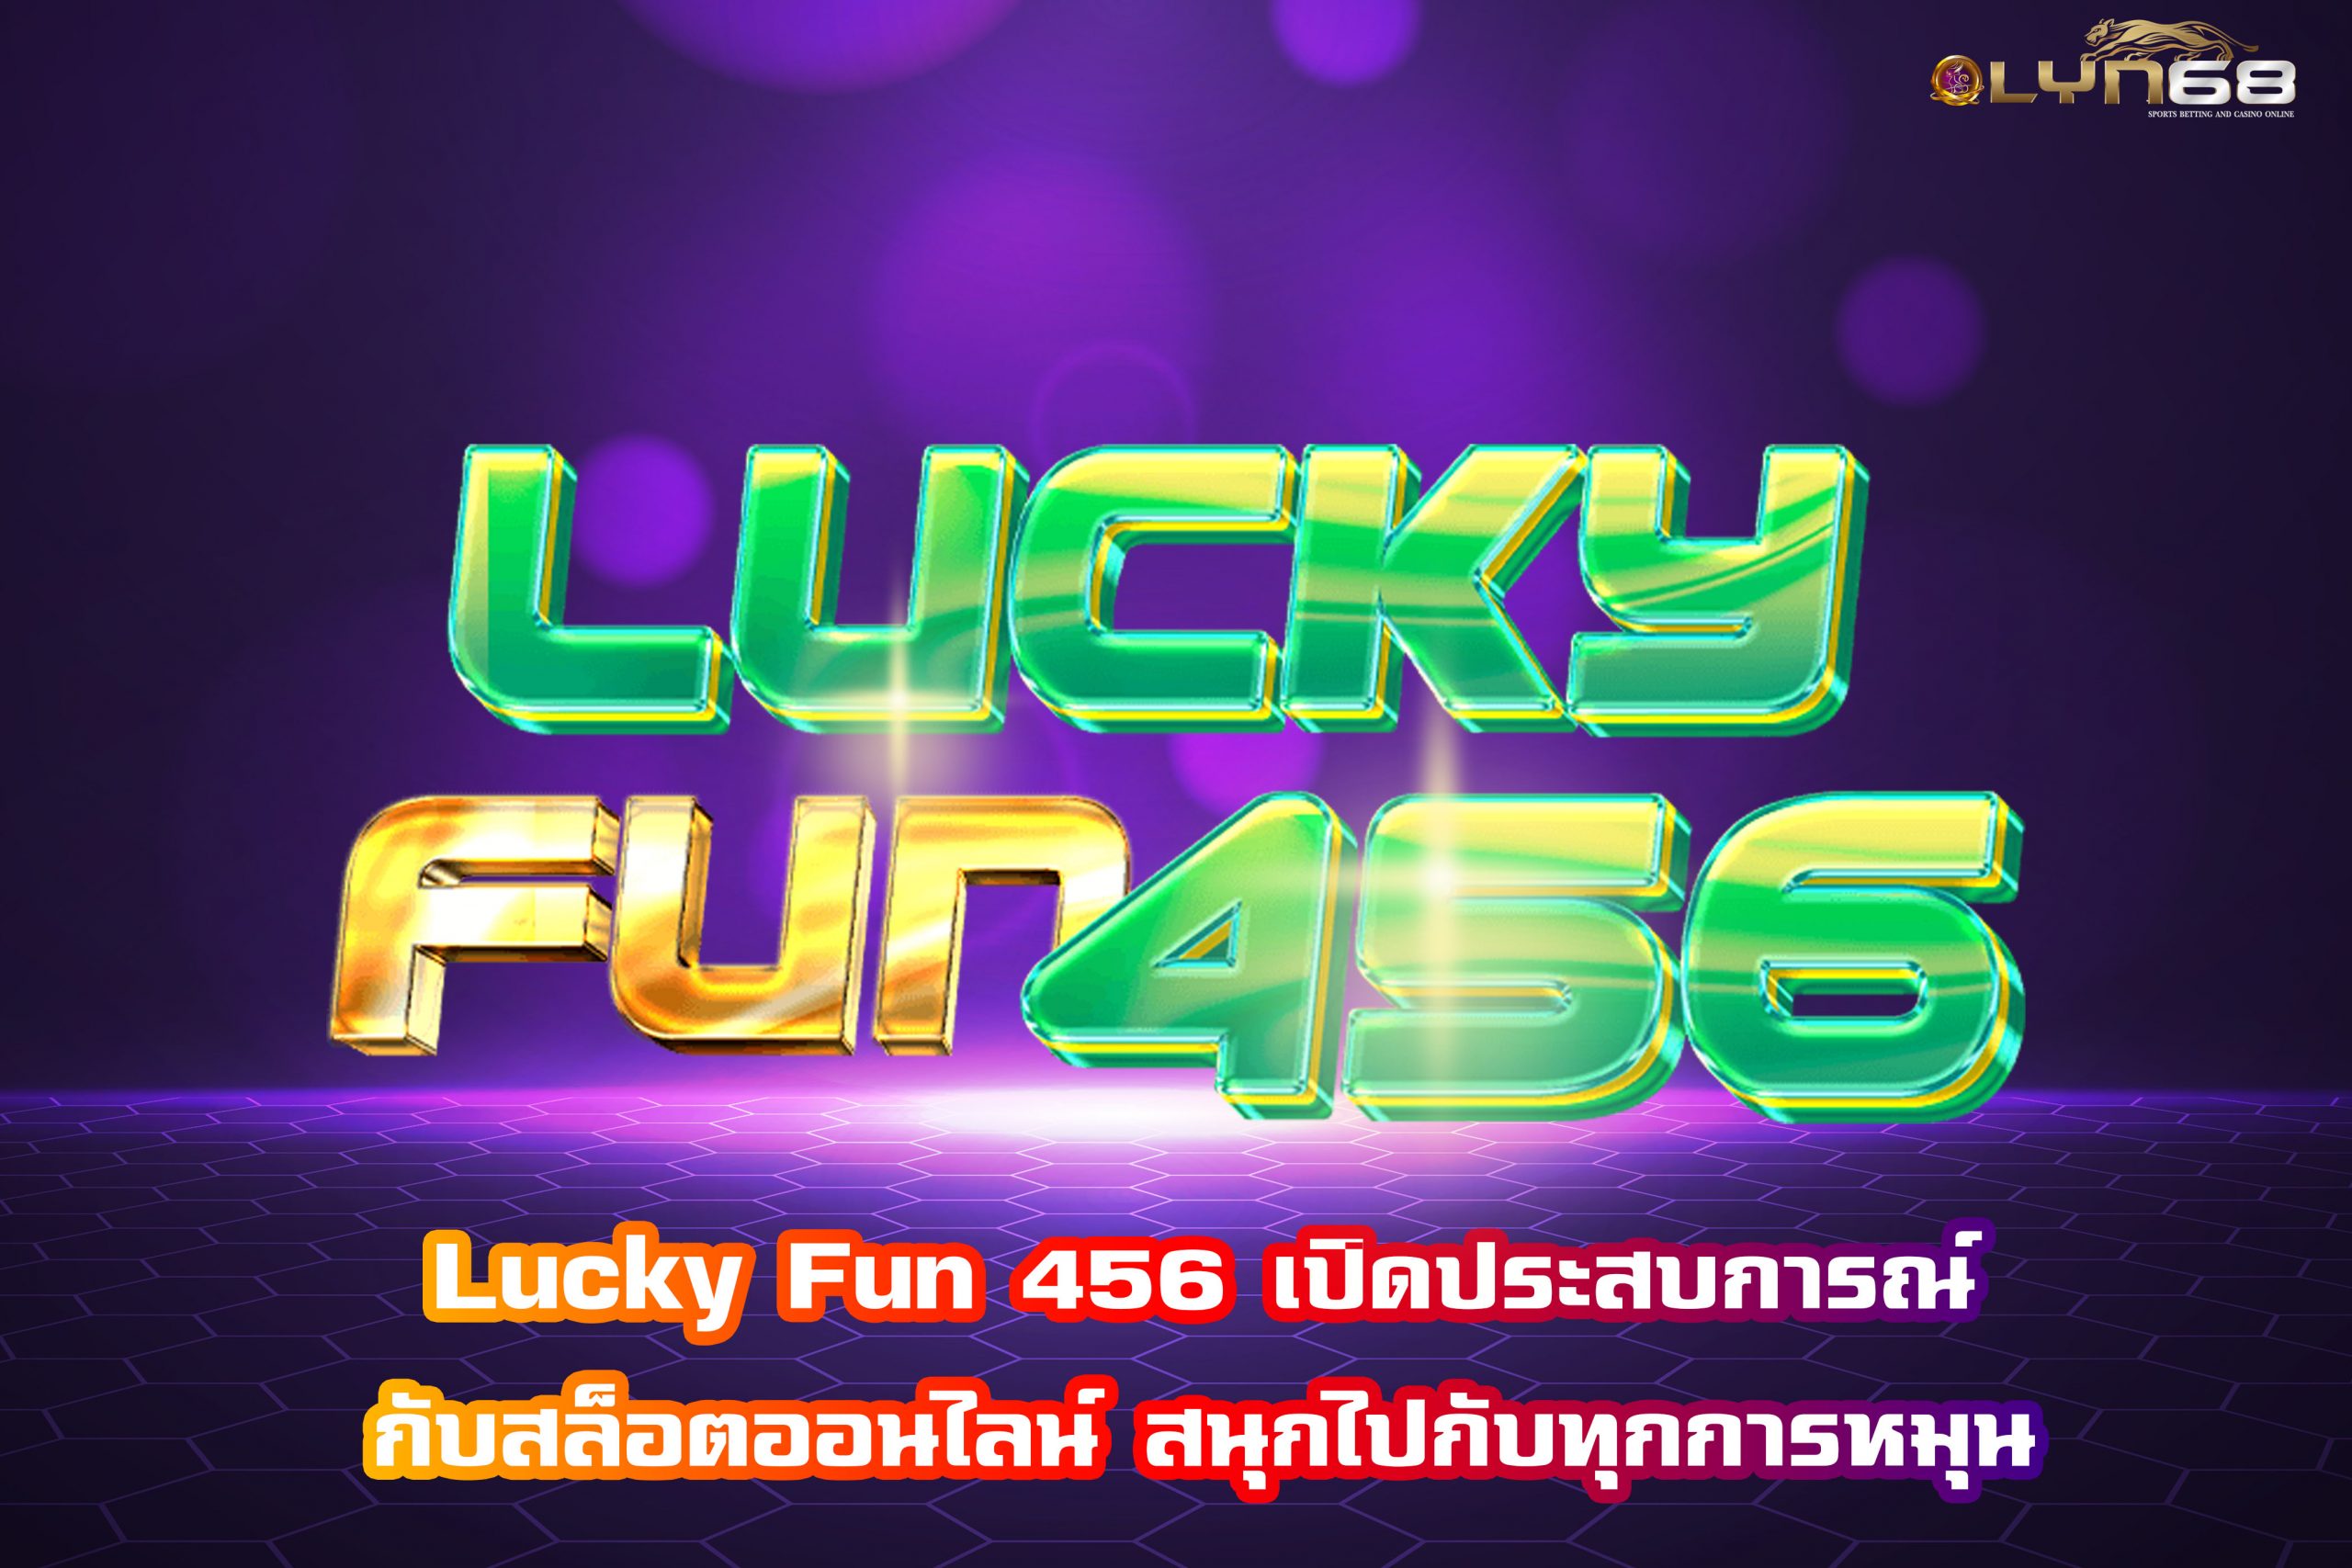 Lucky Fun 456 เปิดประสบการณ์กับสล็อตออนไลน์ สนุกไปกับทุกการหมุน